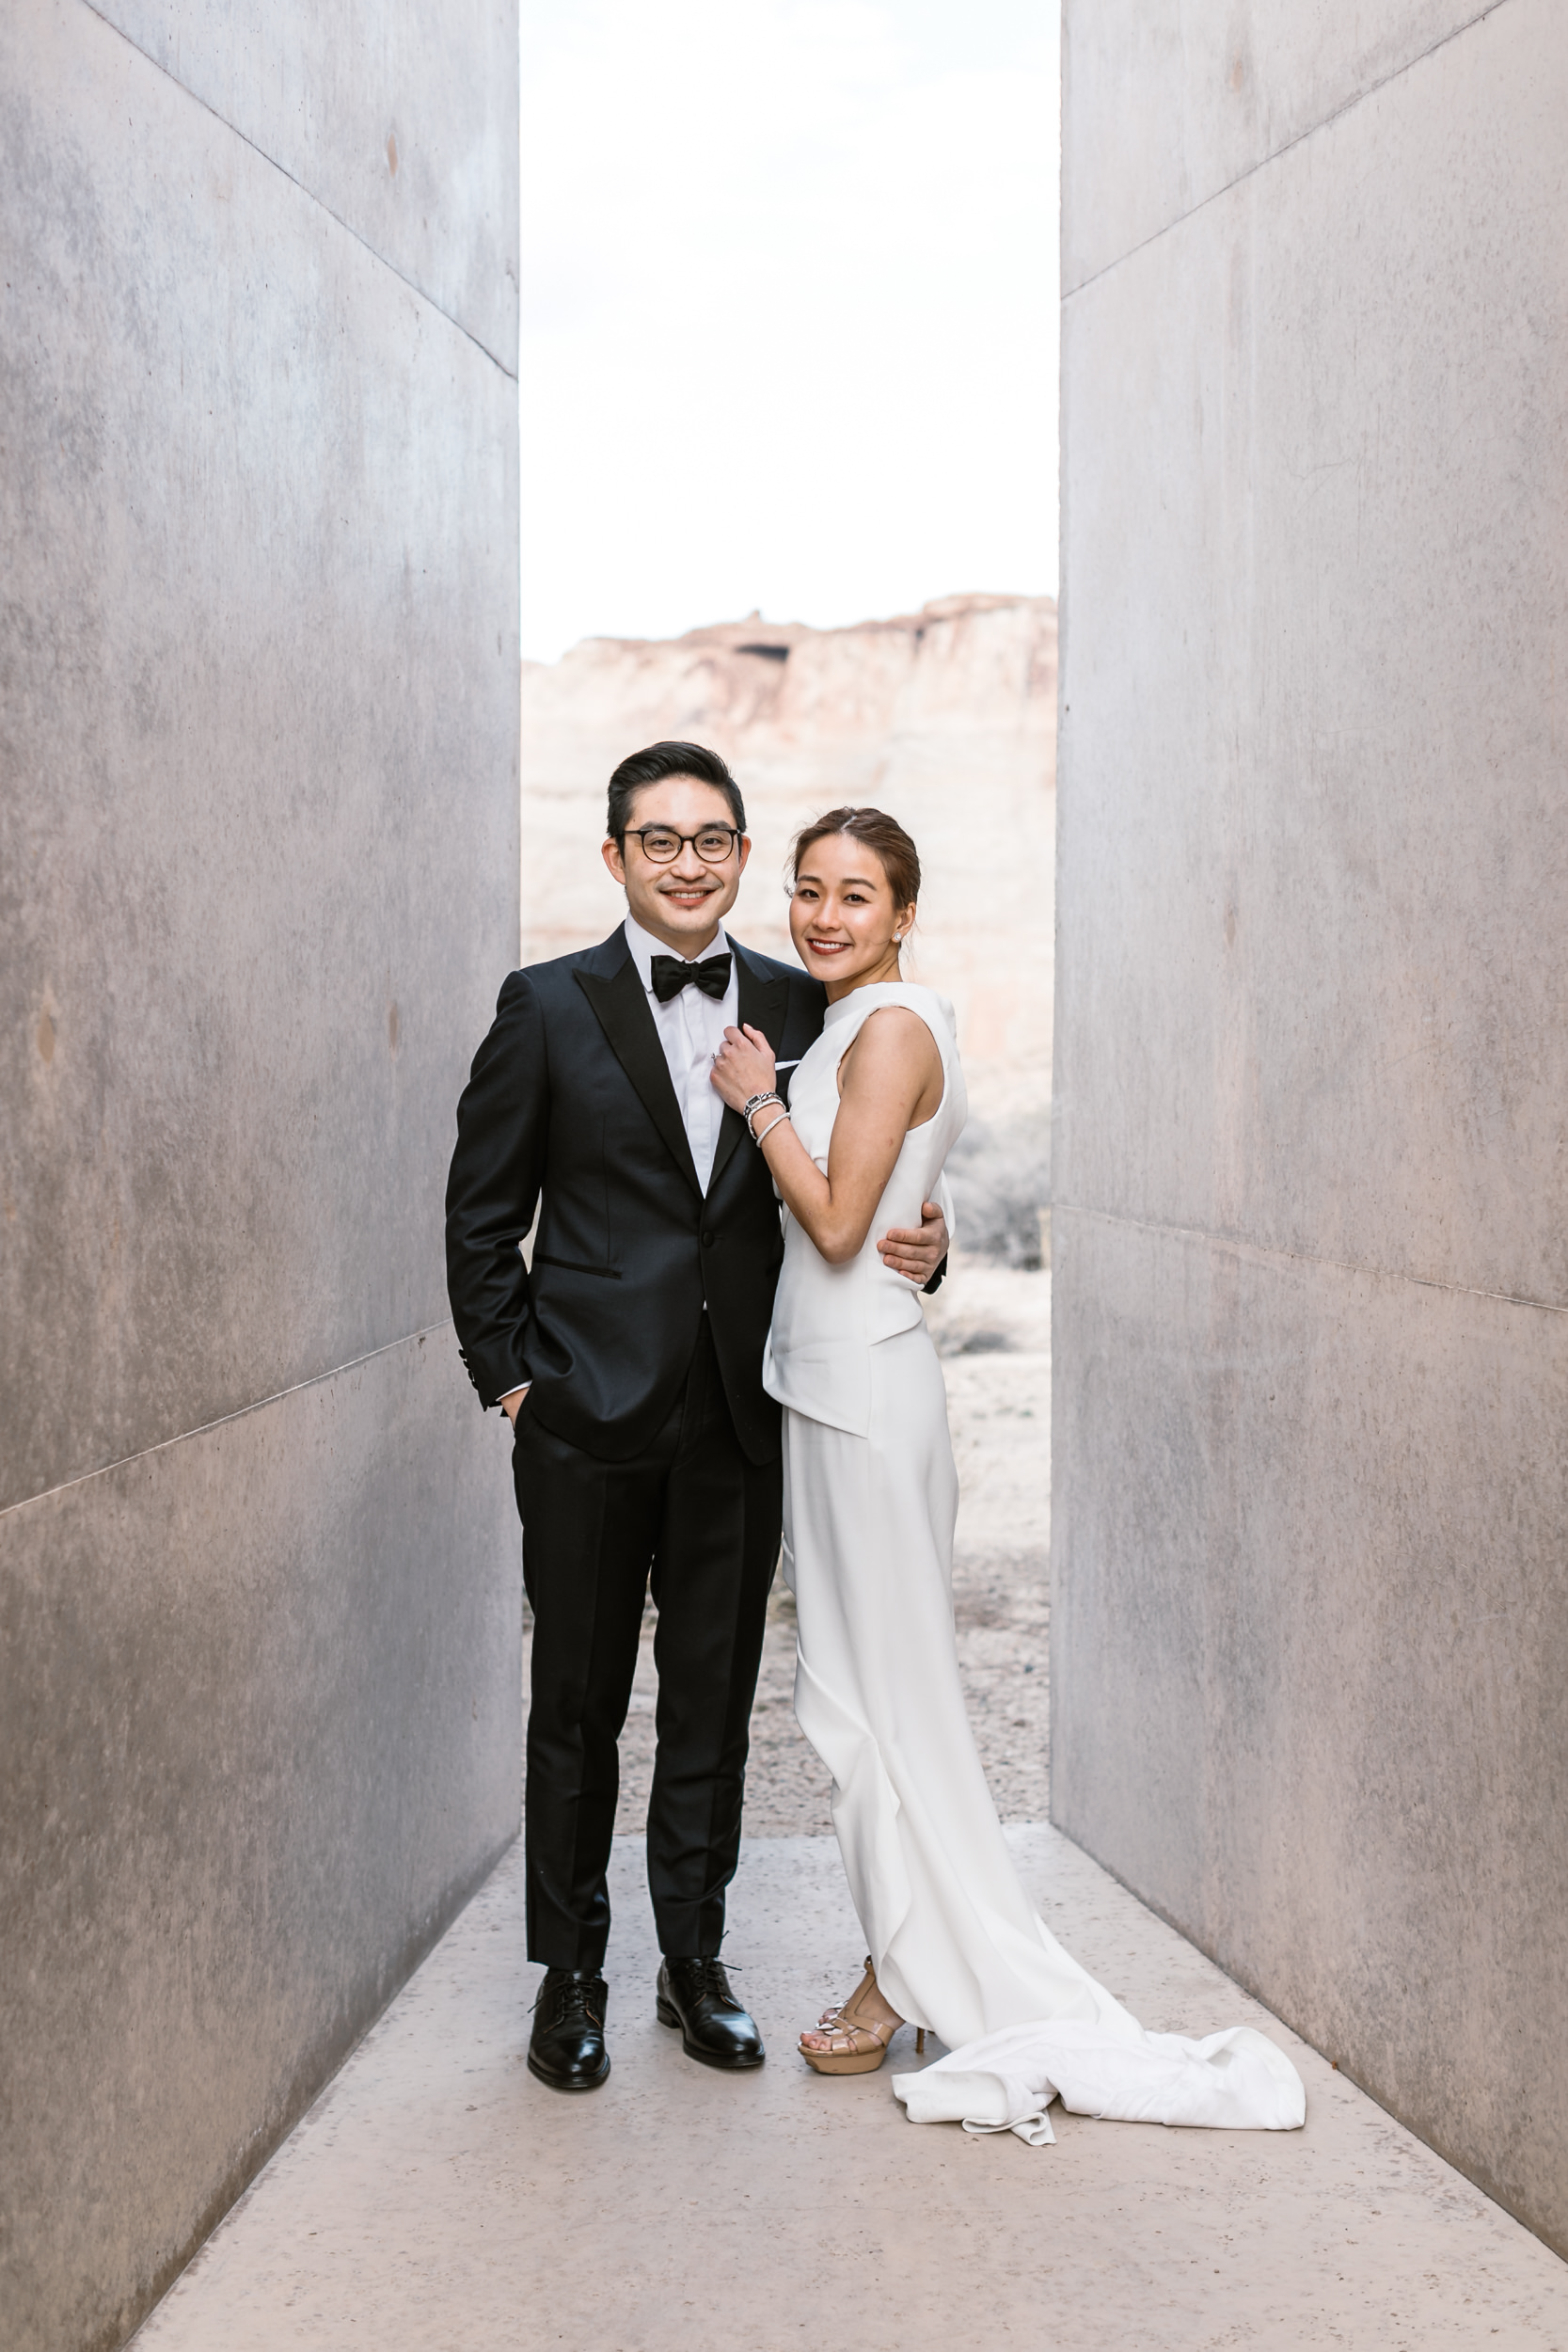 Amangiri Elopement Wedding | Luxury Destination Wedding in Utah | The Hearnes Adventure Photography